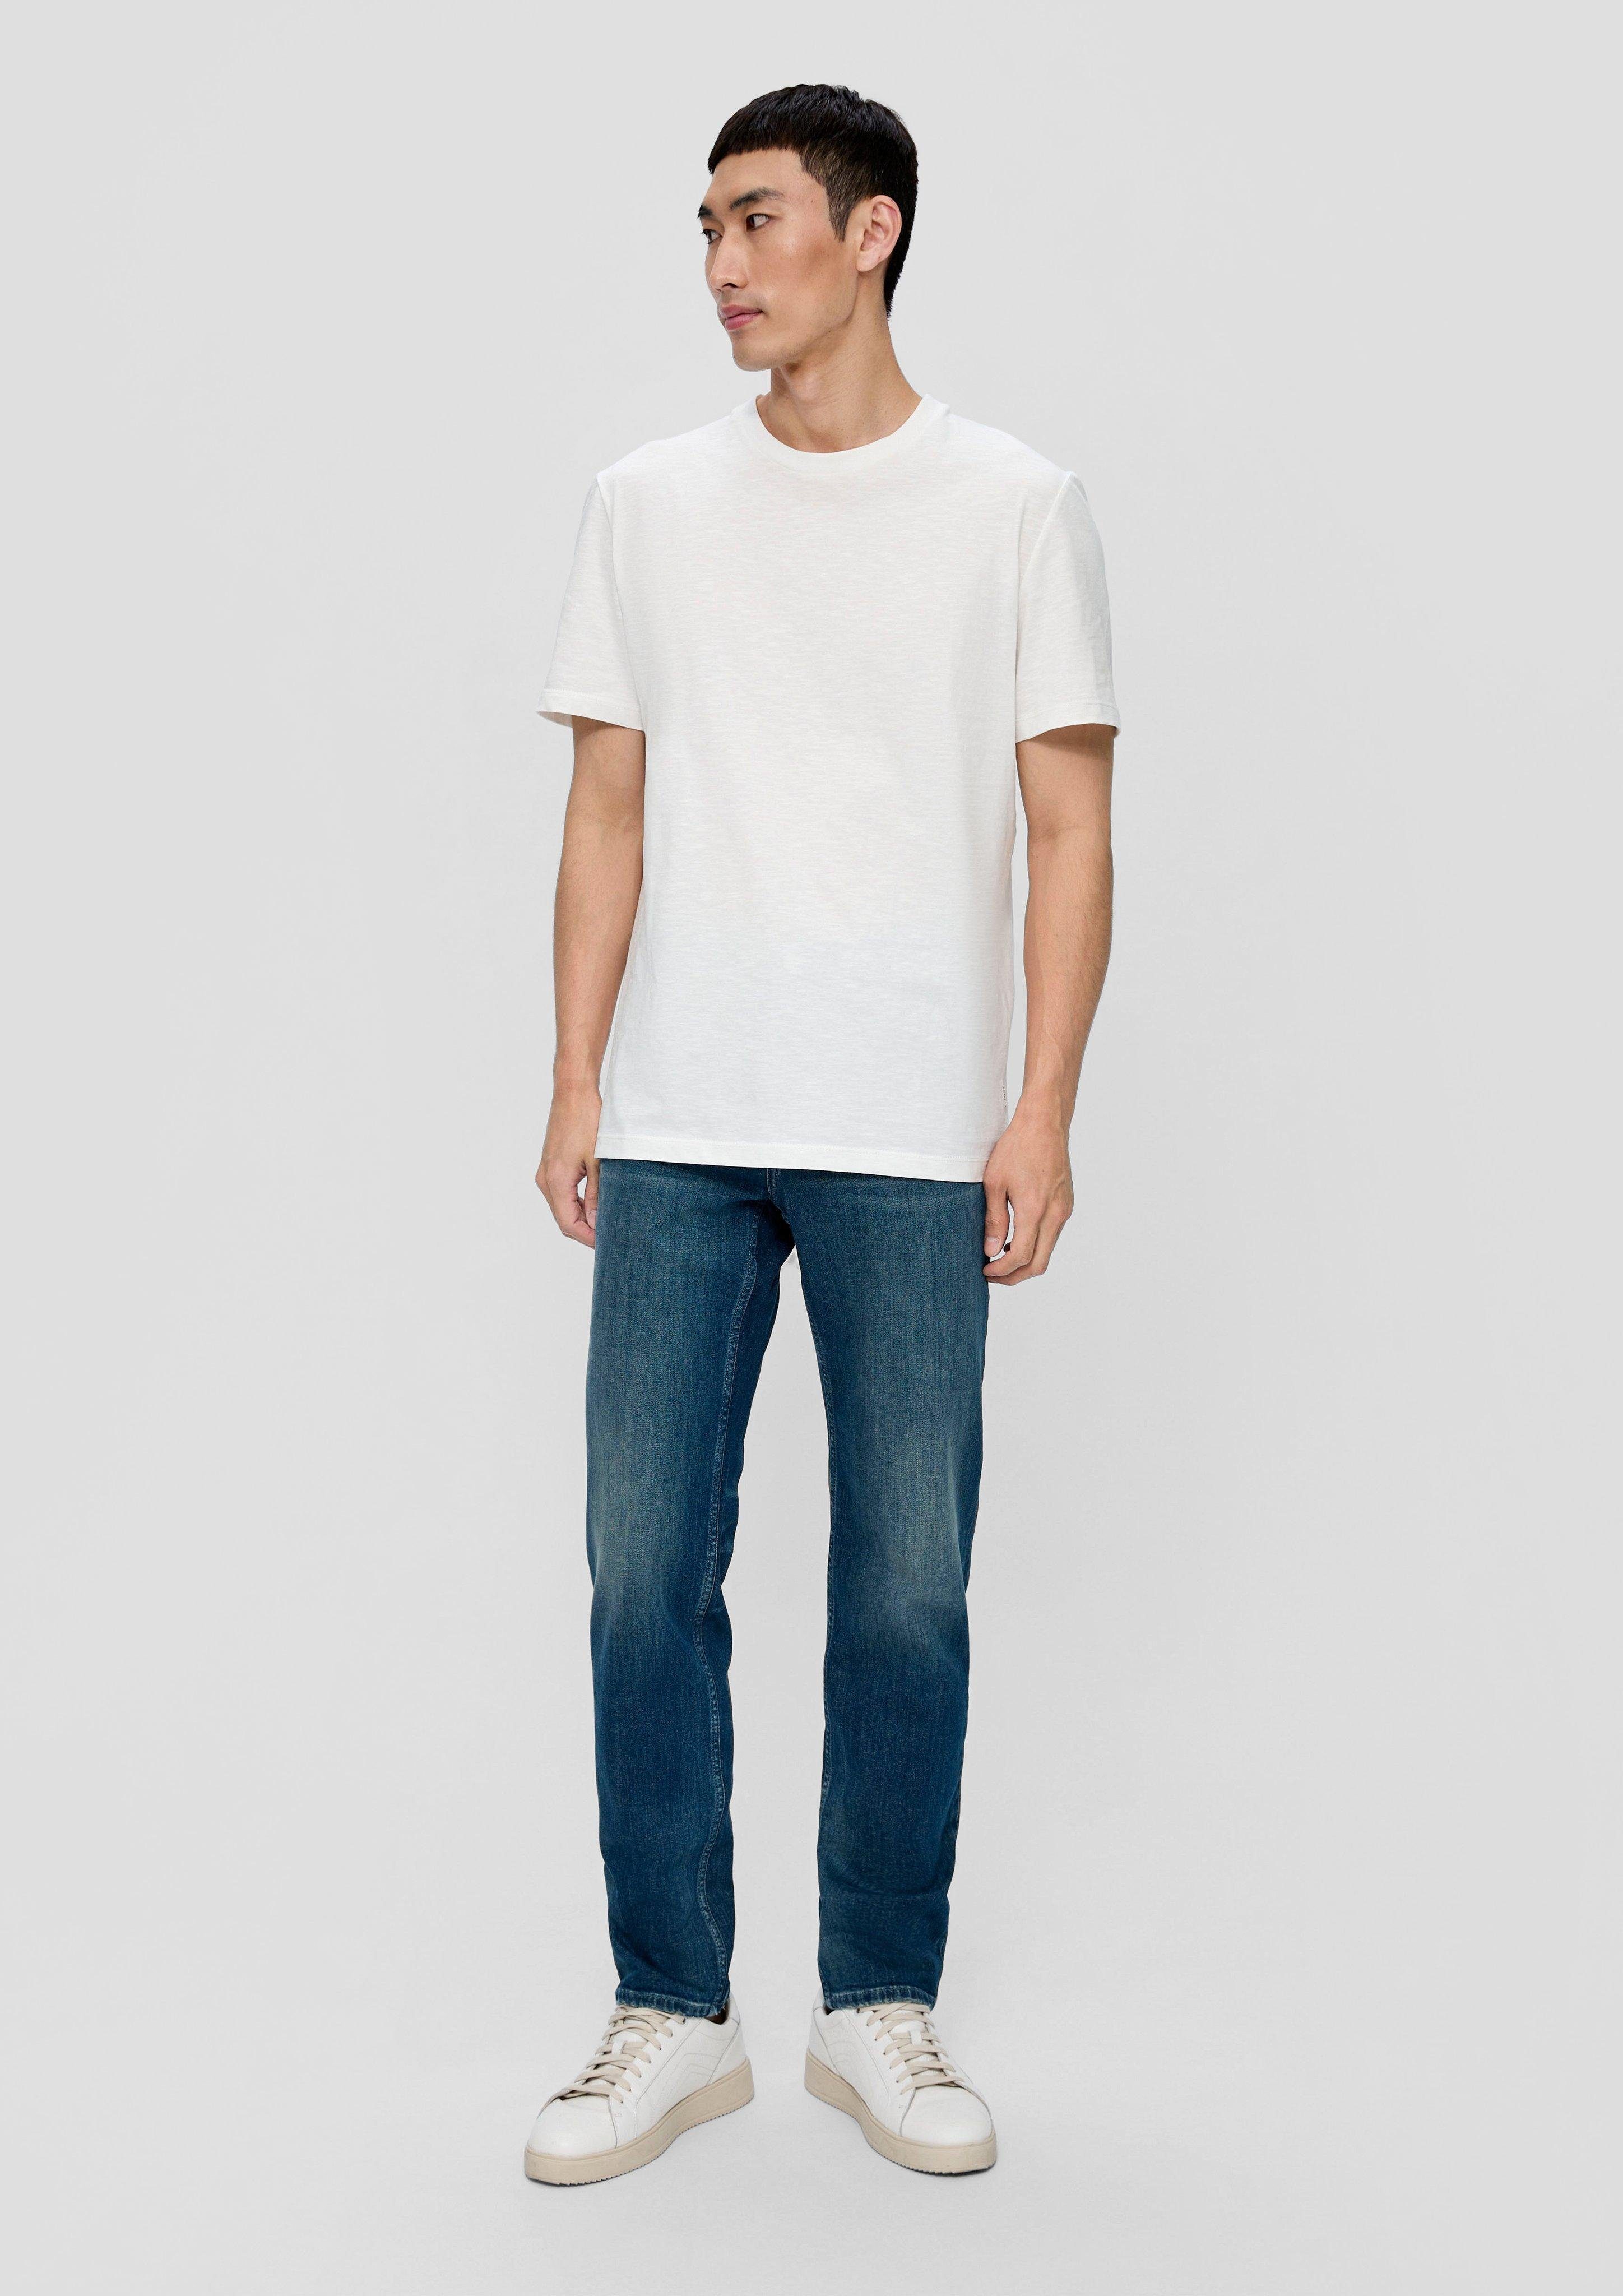 Nelio / / Jeans Leg Slim Label-Patch Fit Rise dunkelblau Mid Stoffhose s.Oliver / Baumwollstretch / Slim